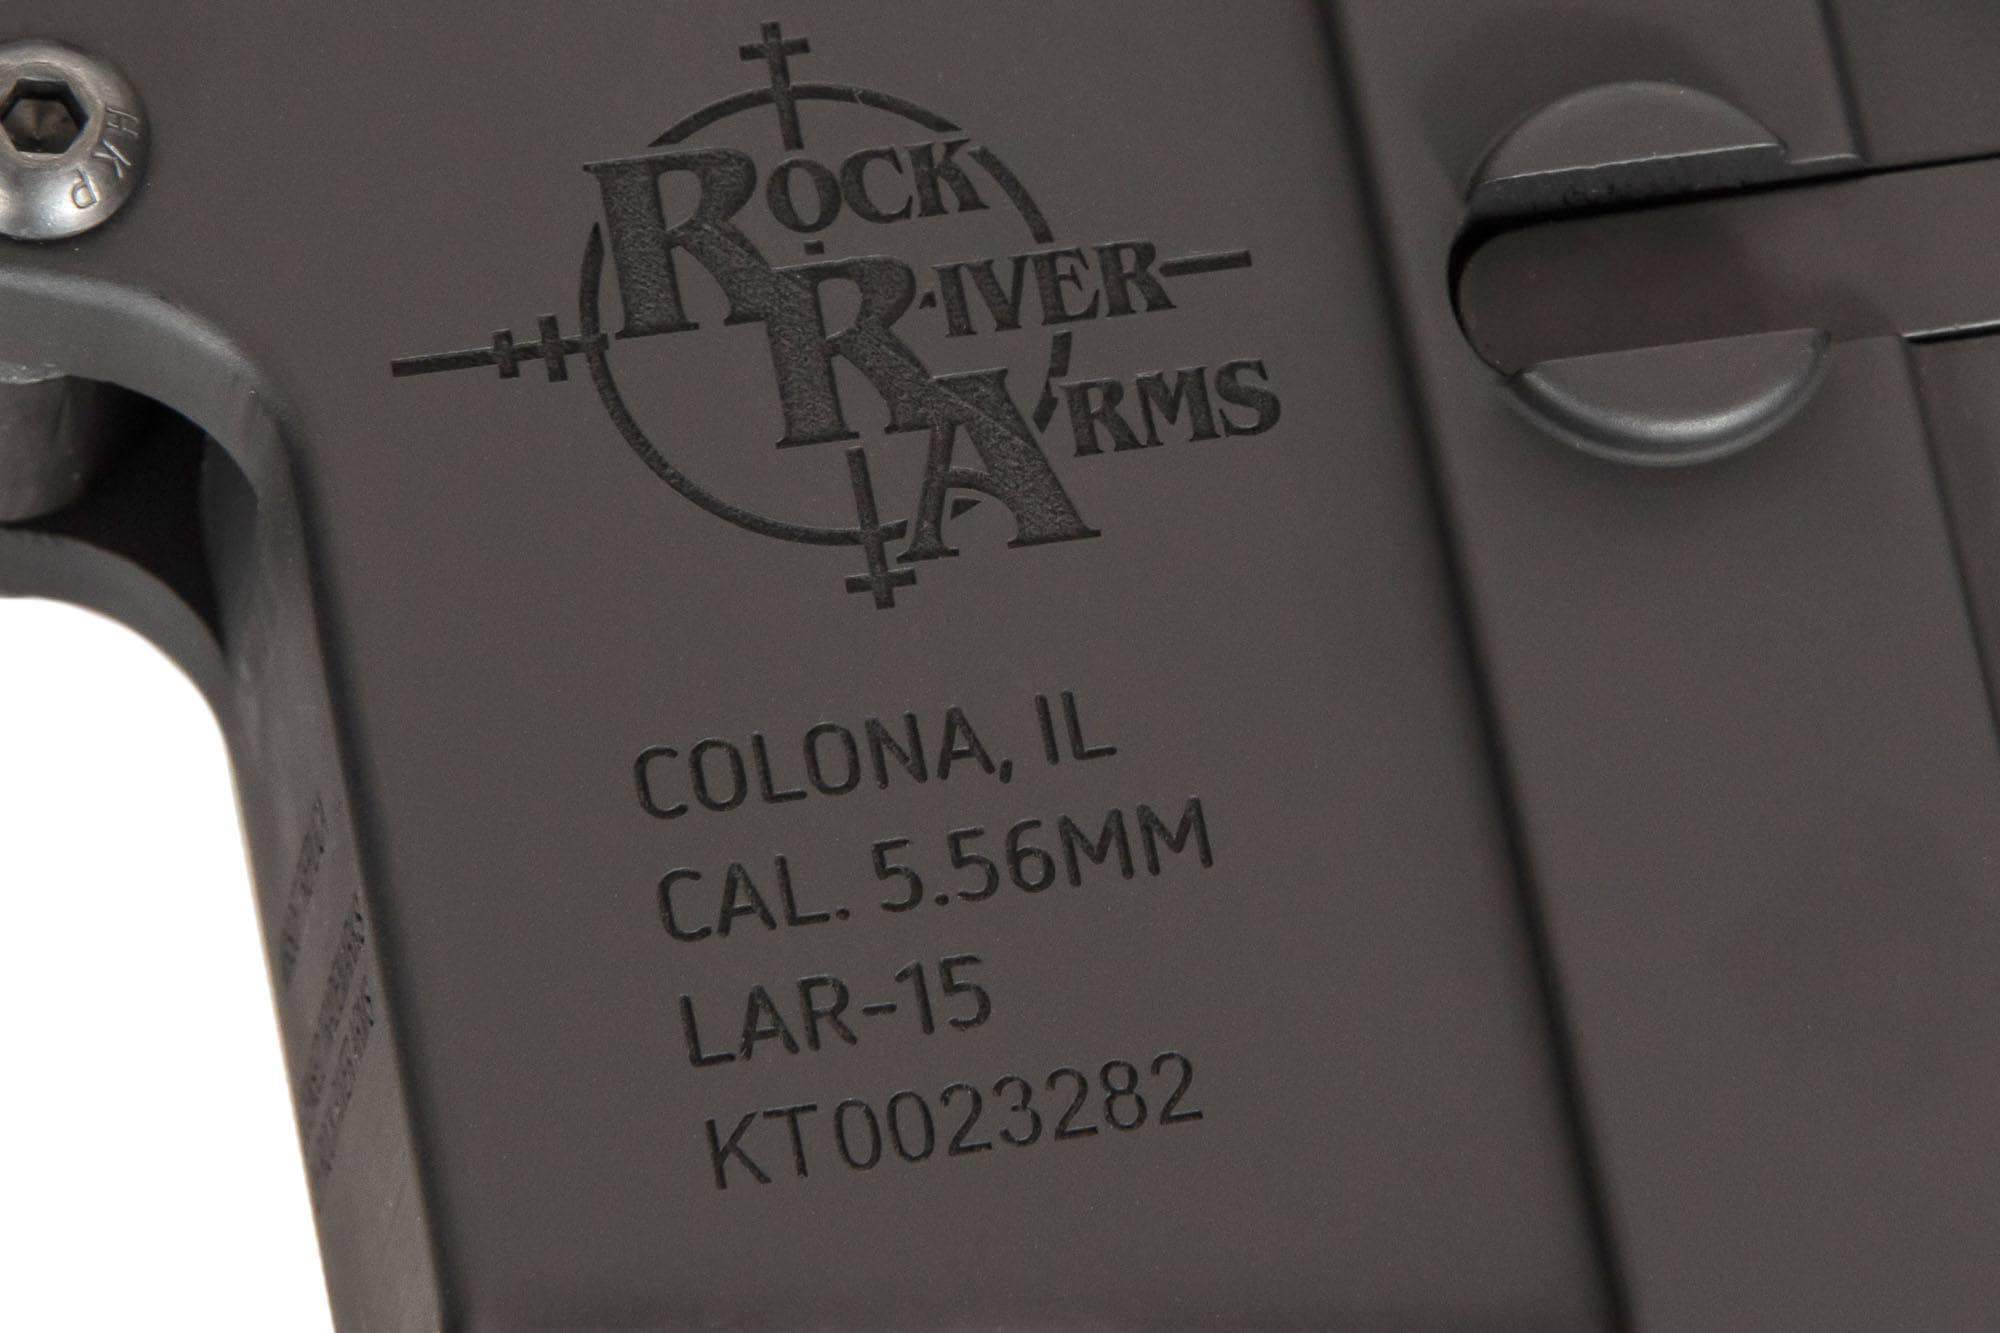 Karabinek szturmowy AEG Specna Arms RRA SA-E03 Edge 2.0 - czarny